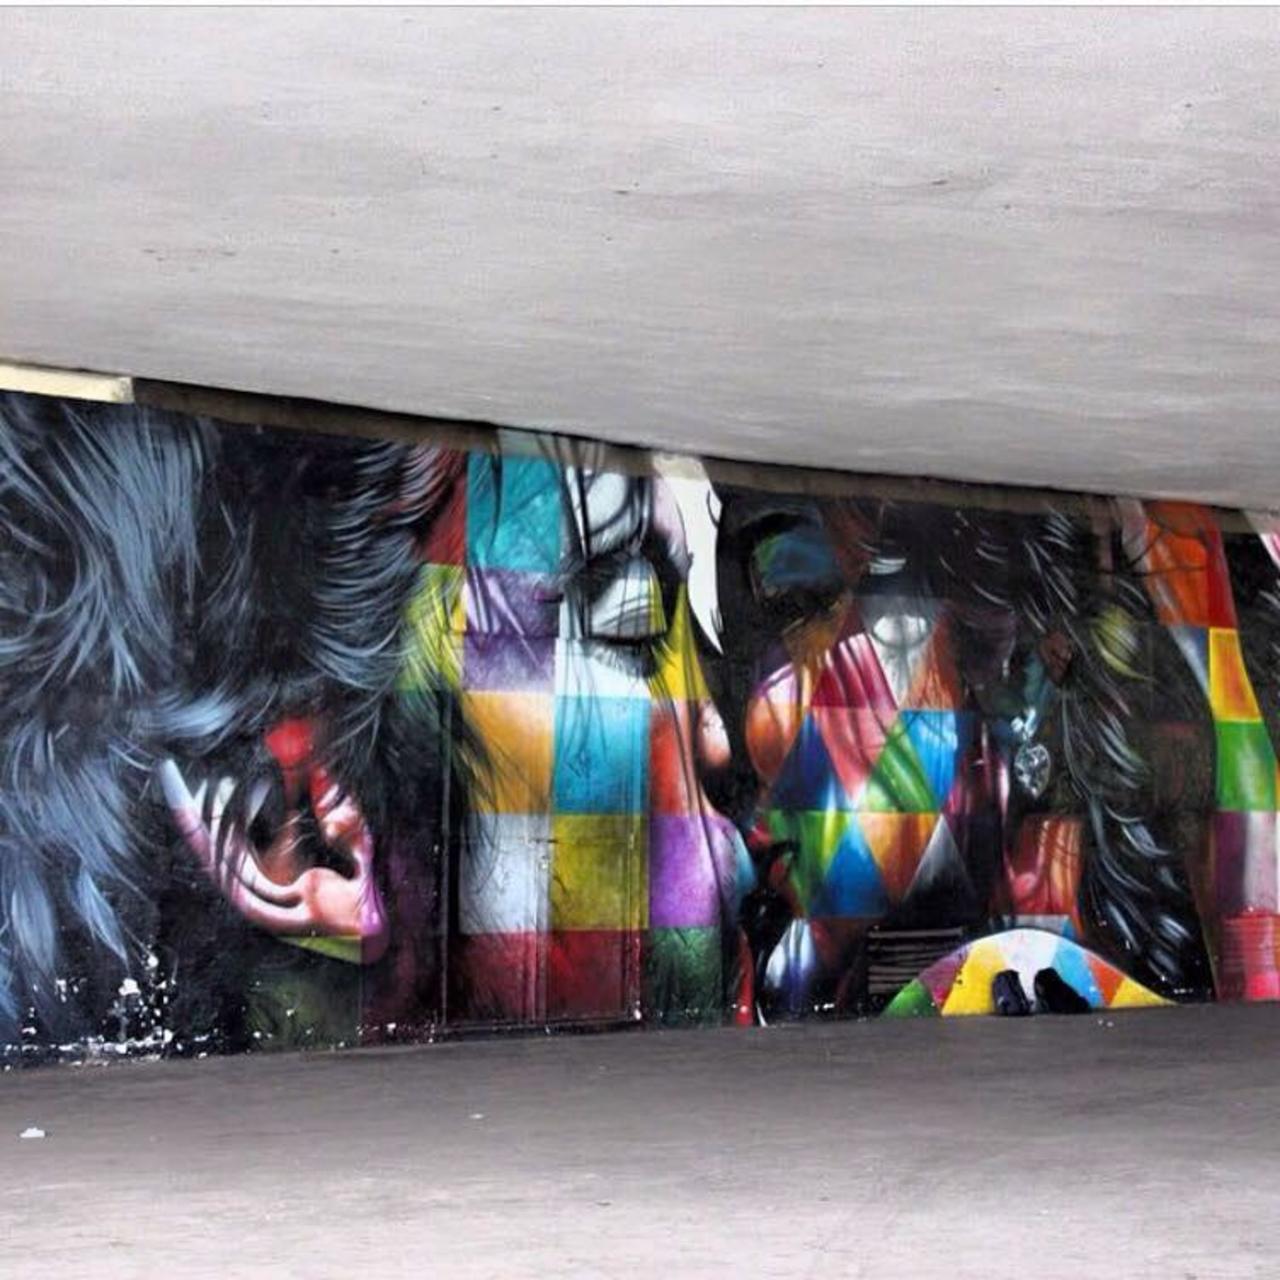 Eduardo Kobra 

#art #mural #graffiti #streetart http://t.co/lCYWnaGUE0 via @GoogleStreetArt